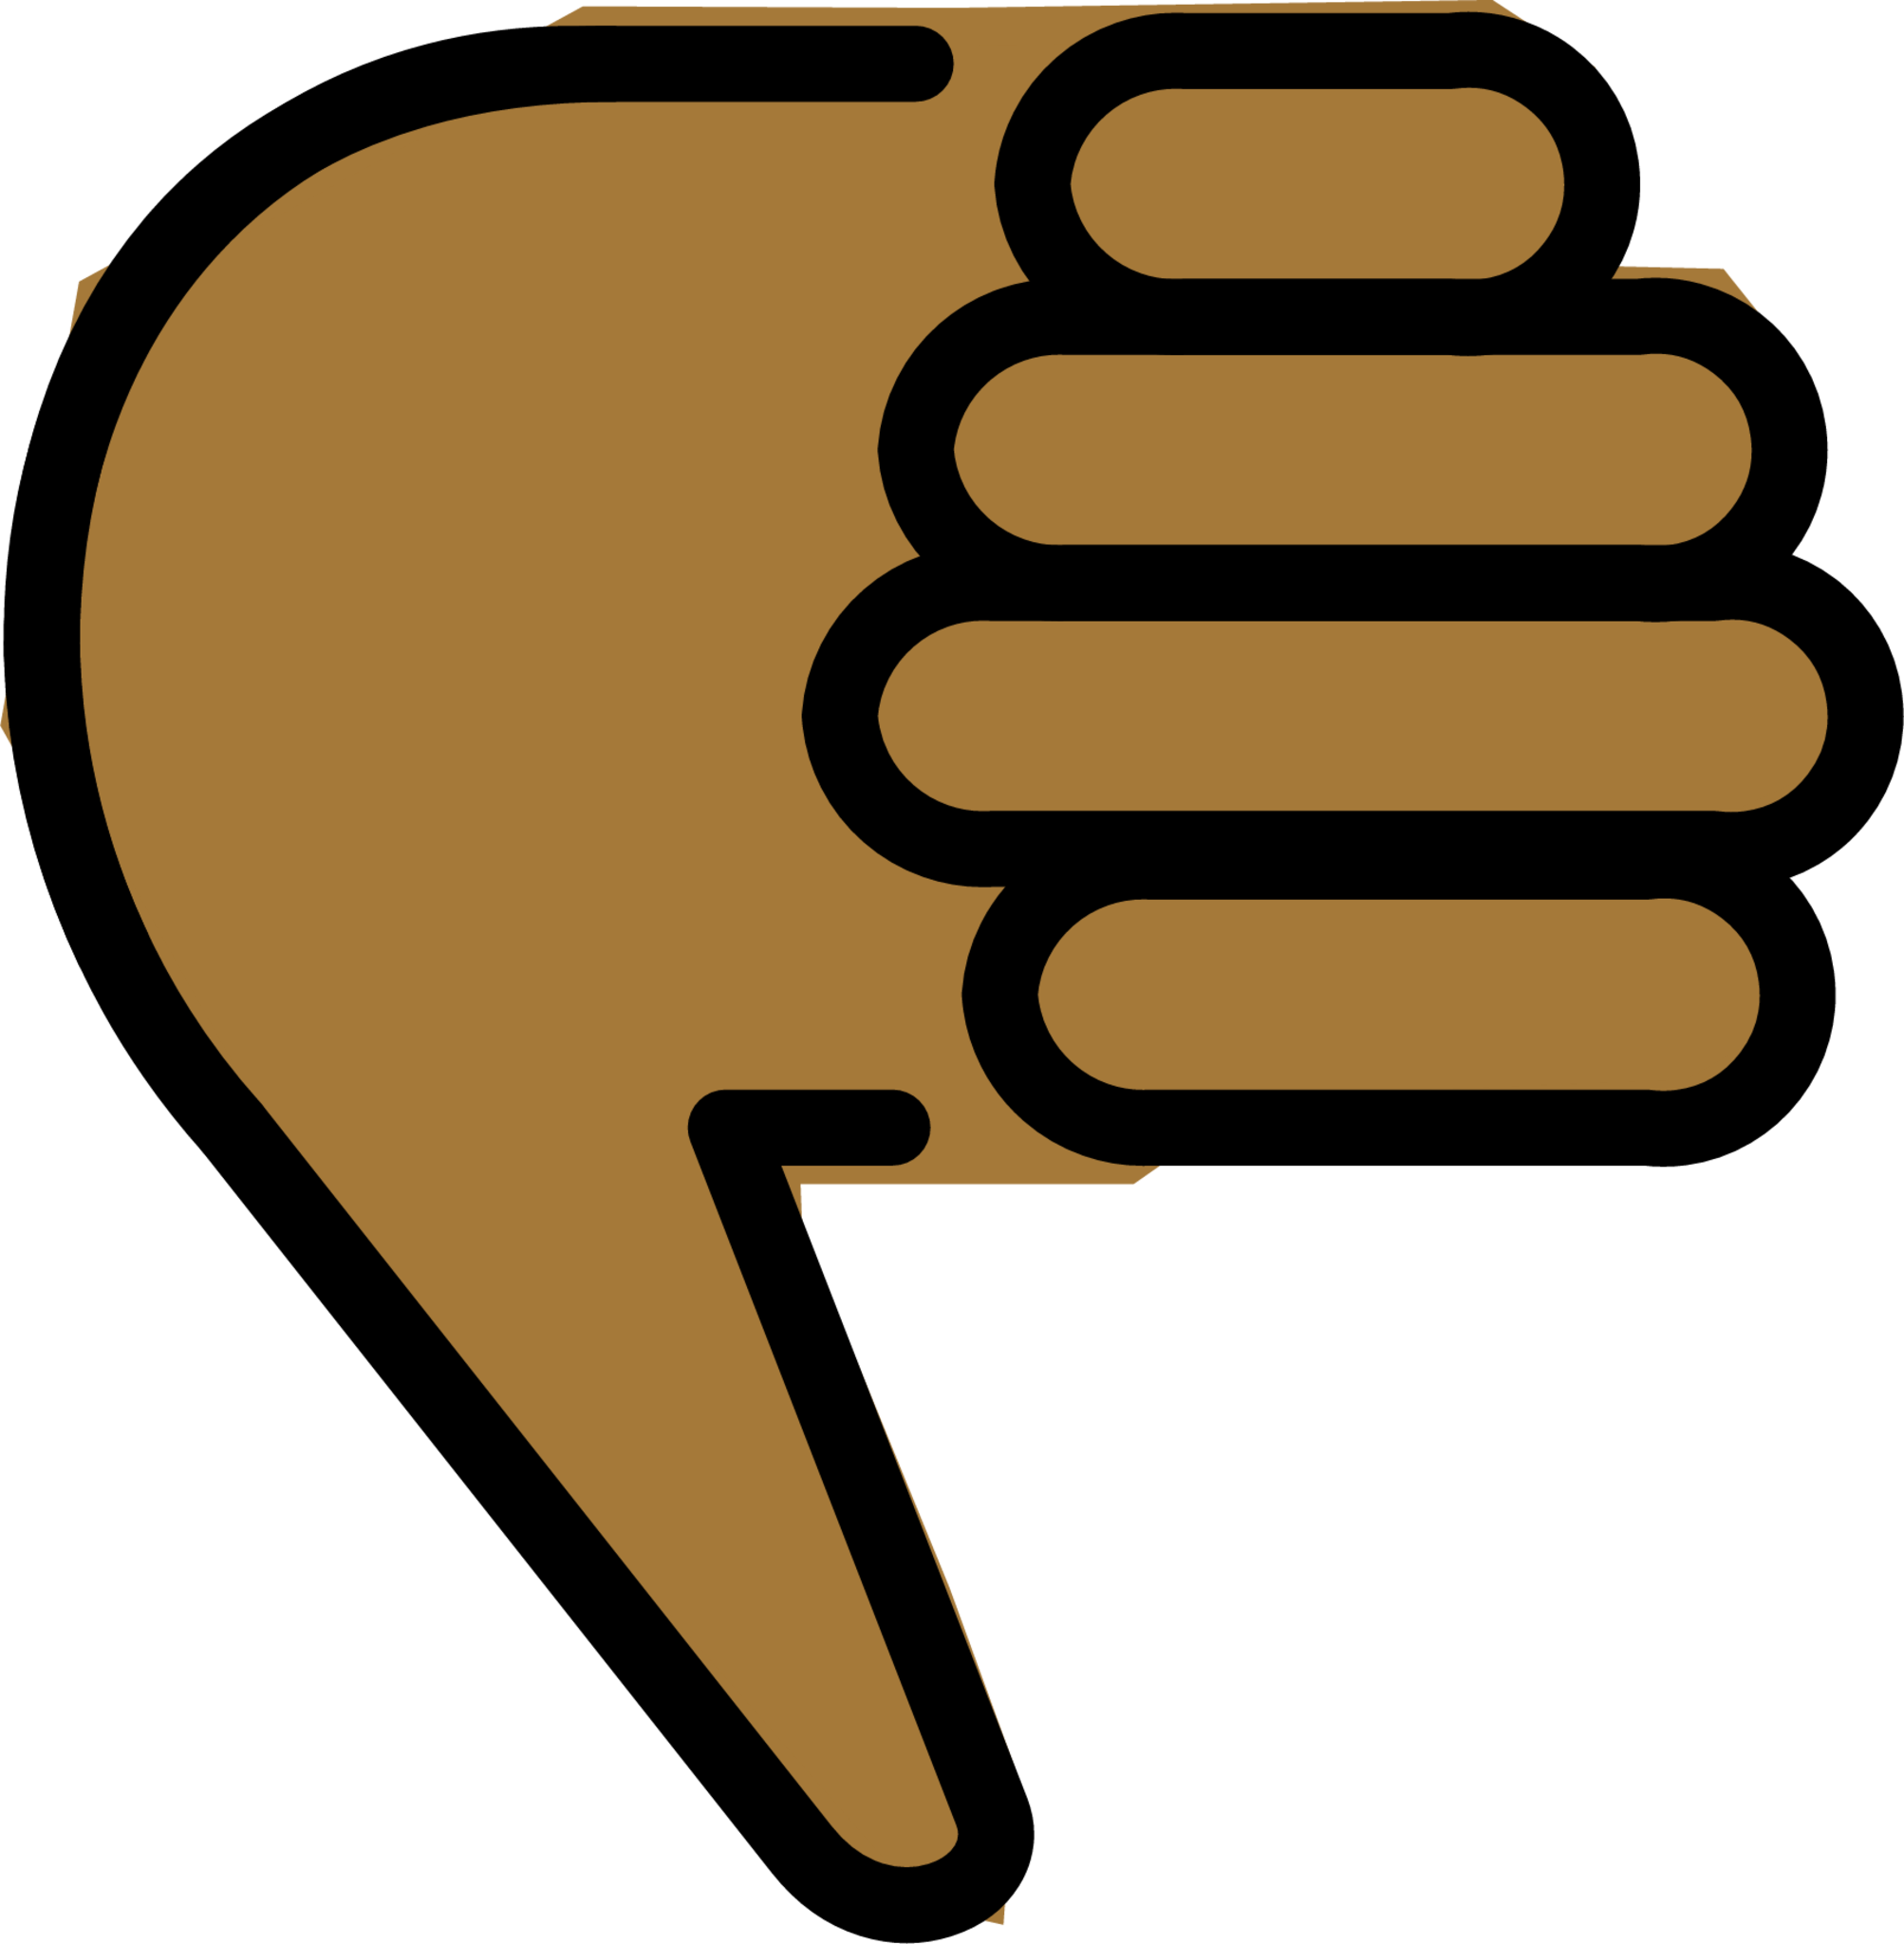 thumbs down: medium-dark skin tone emoji